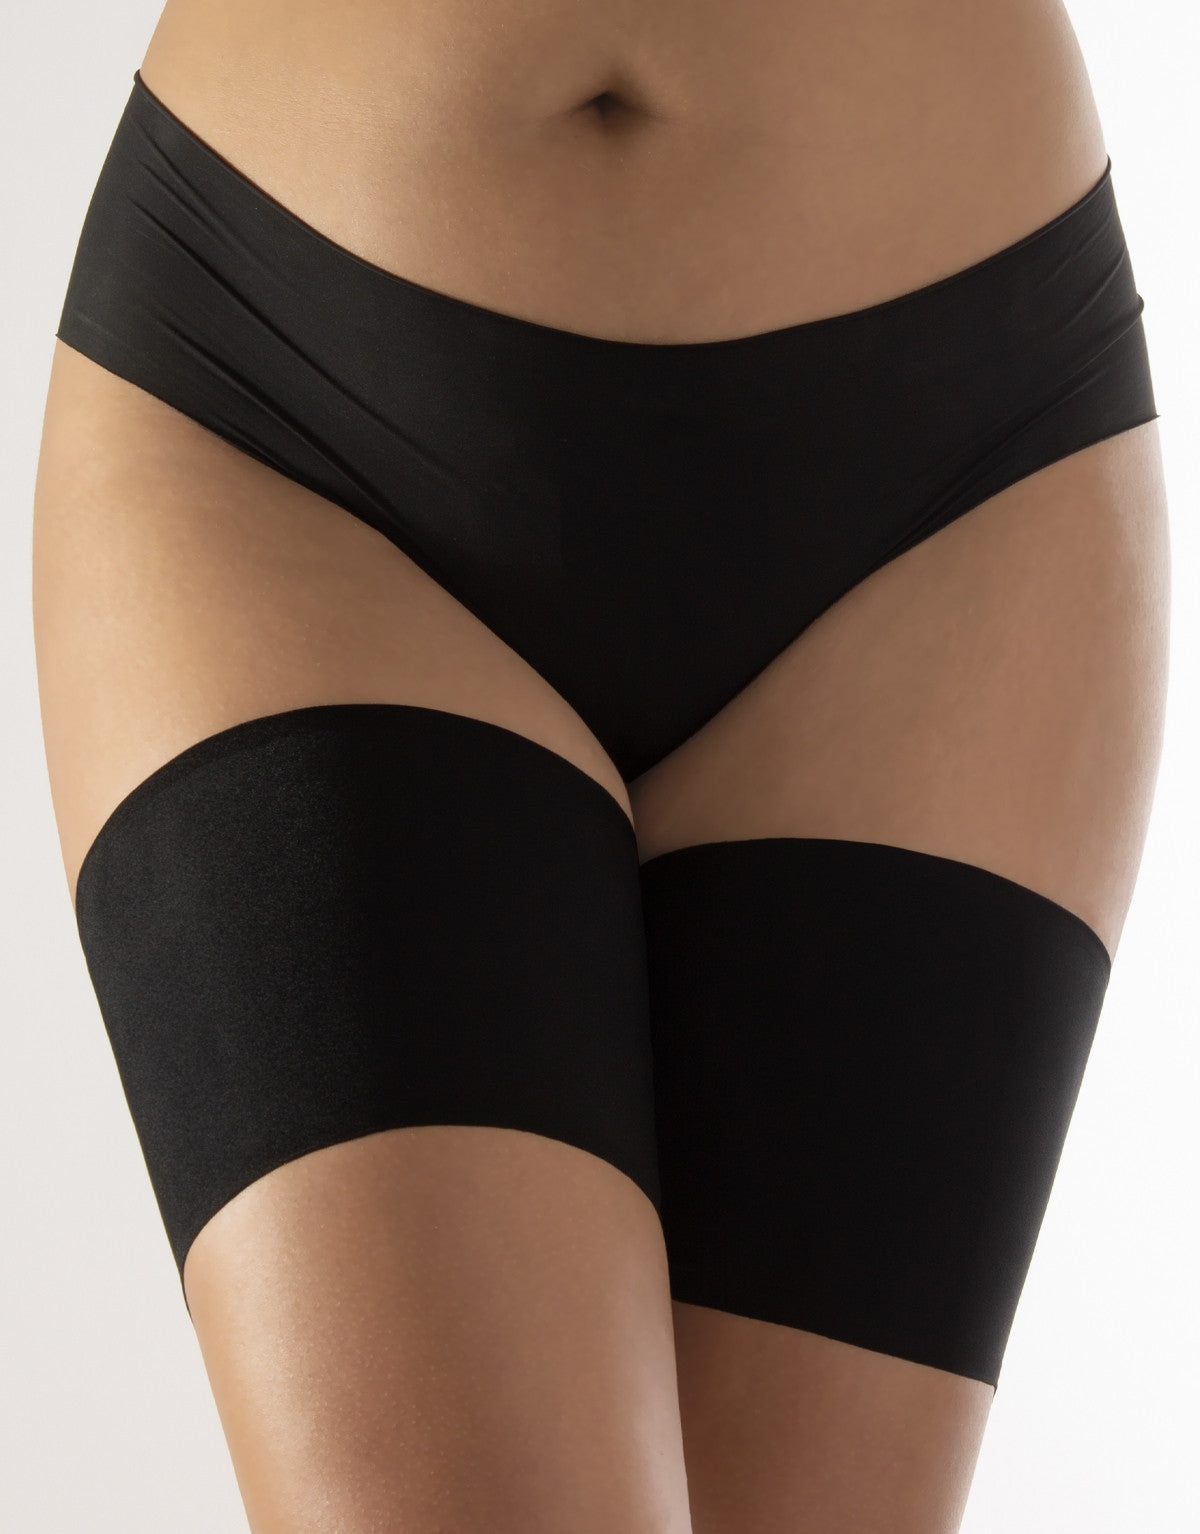 Calzitaly Black Anti-Chafing Thigh Bands to help prevent thigh rash/chub rub